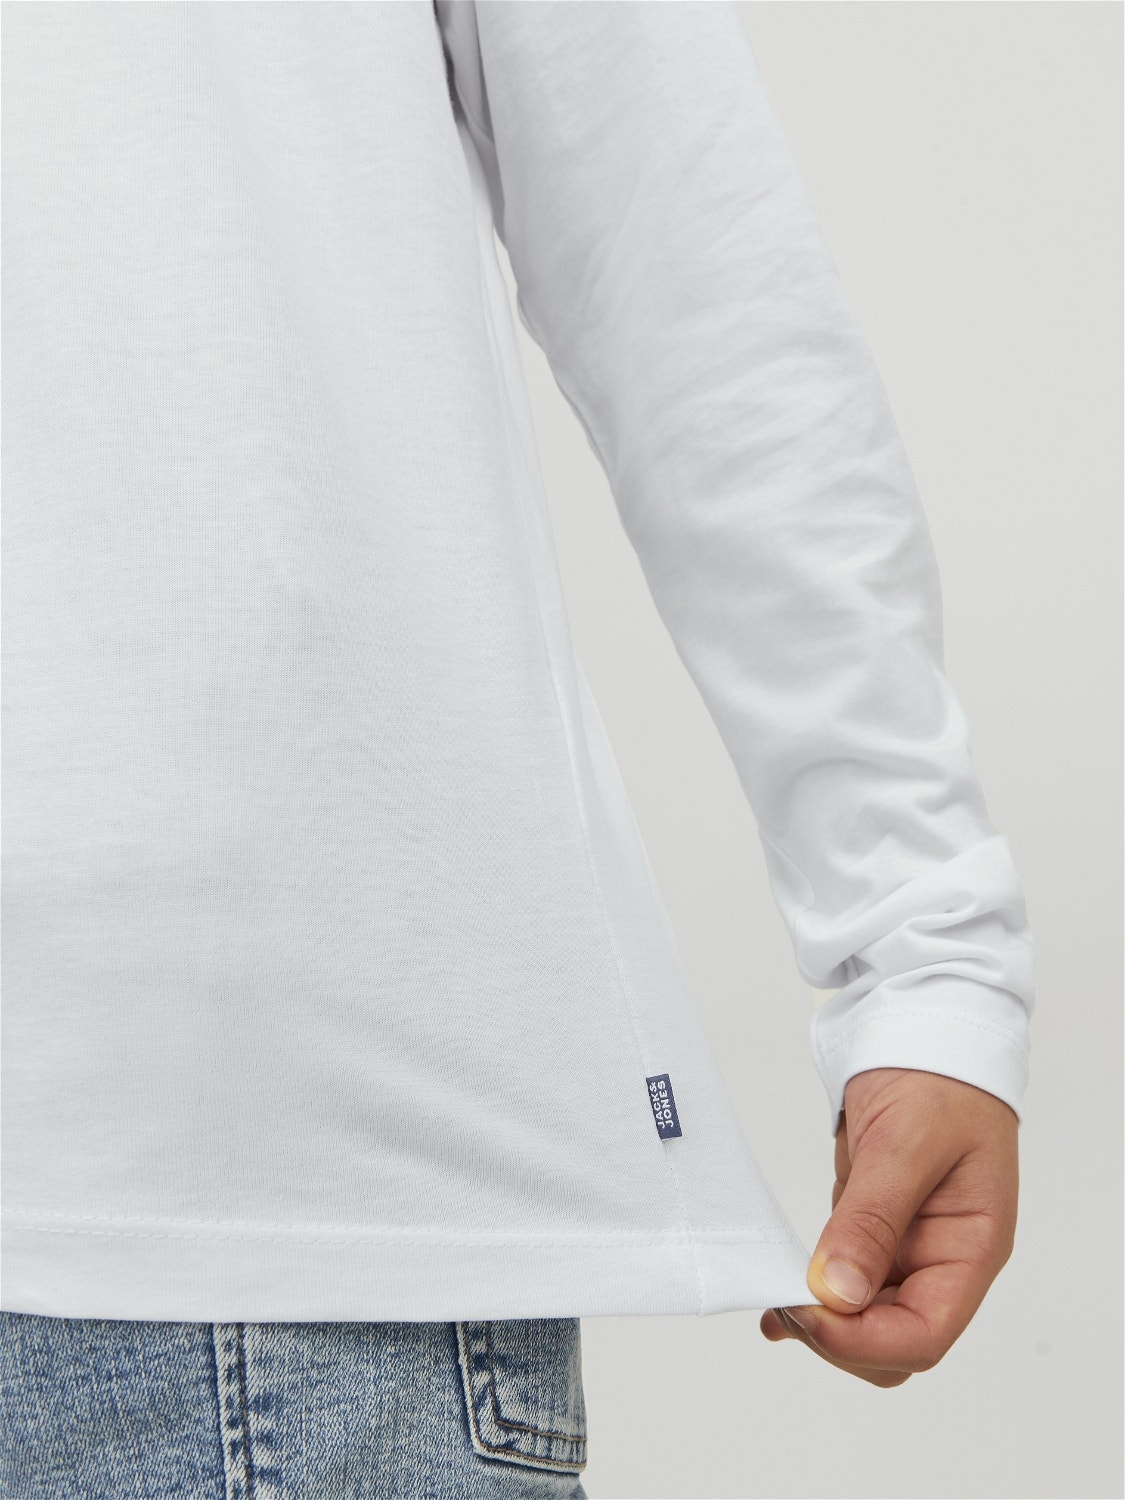 Jack & Jones T-shirt Liso Para meninos -White - 12197050